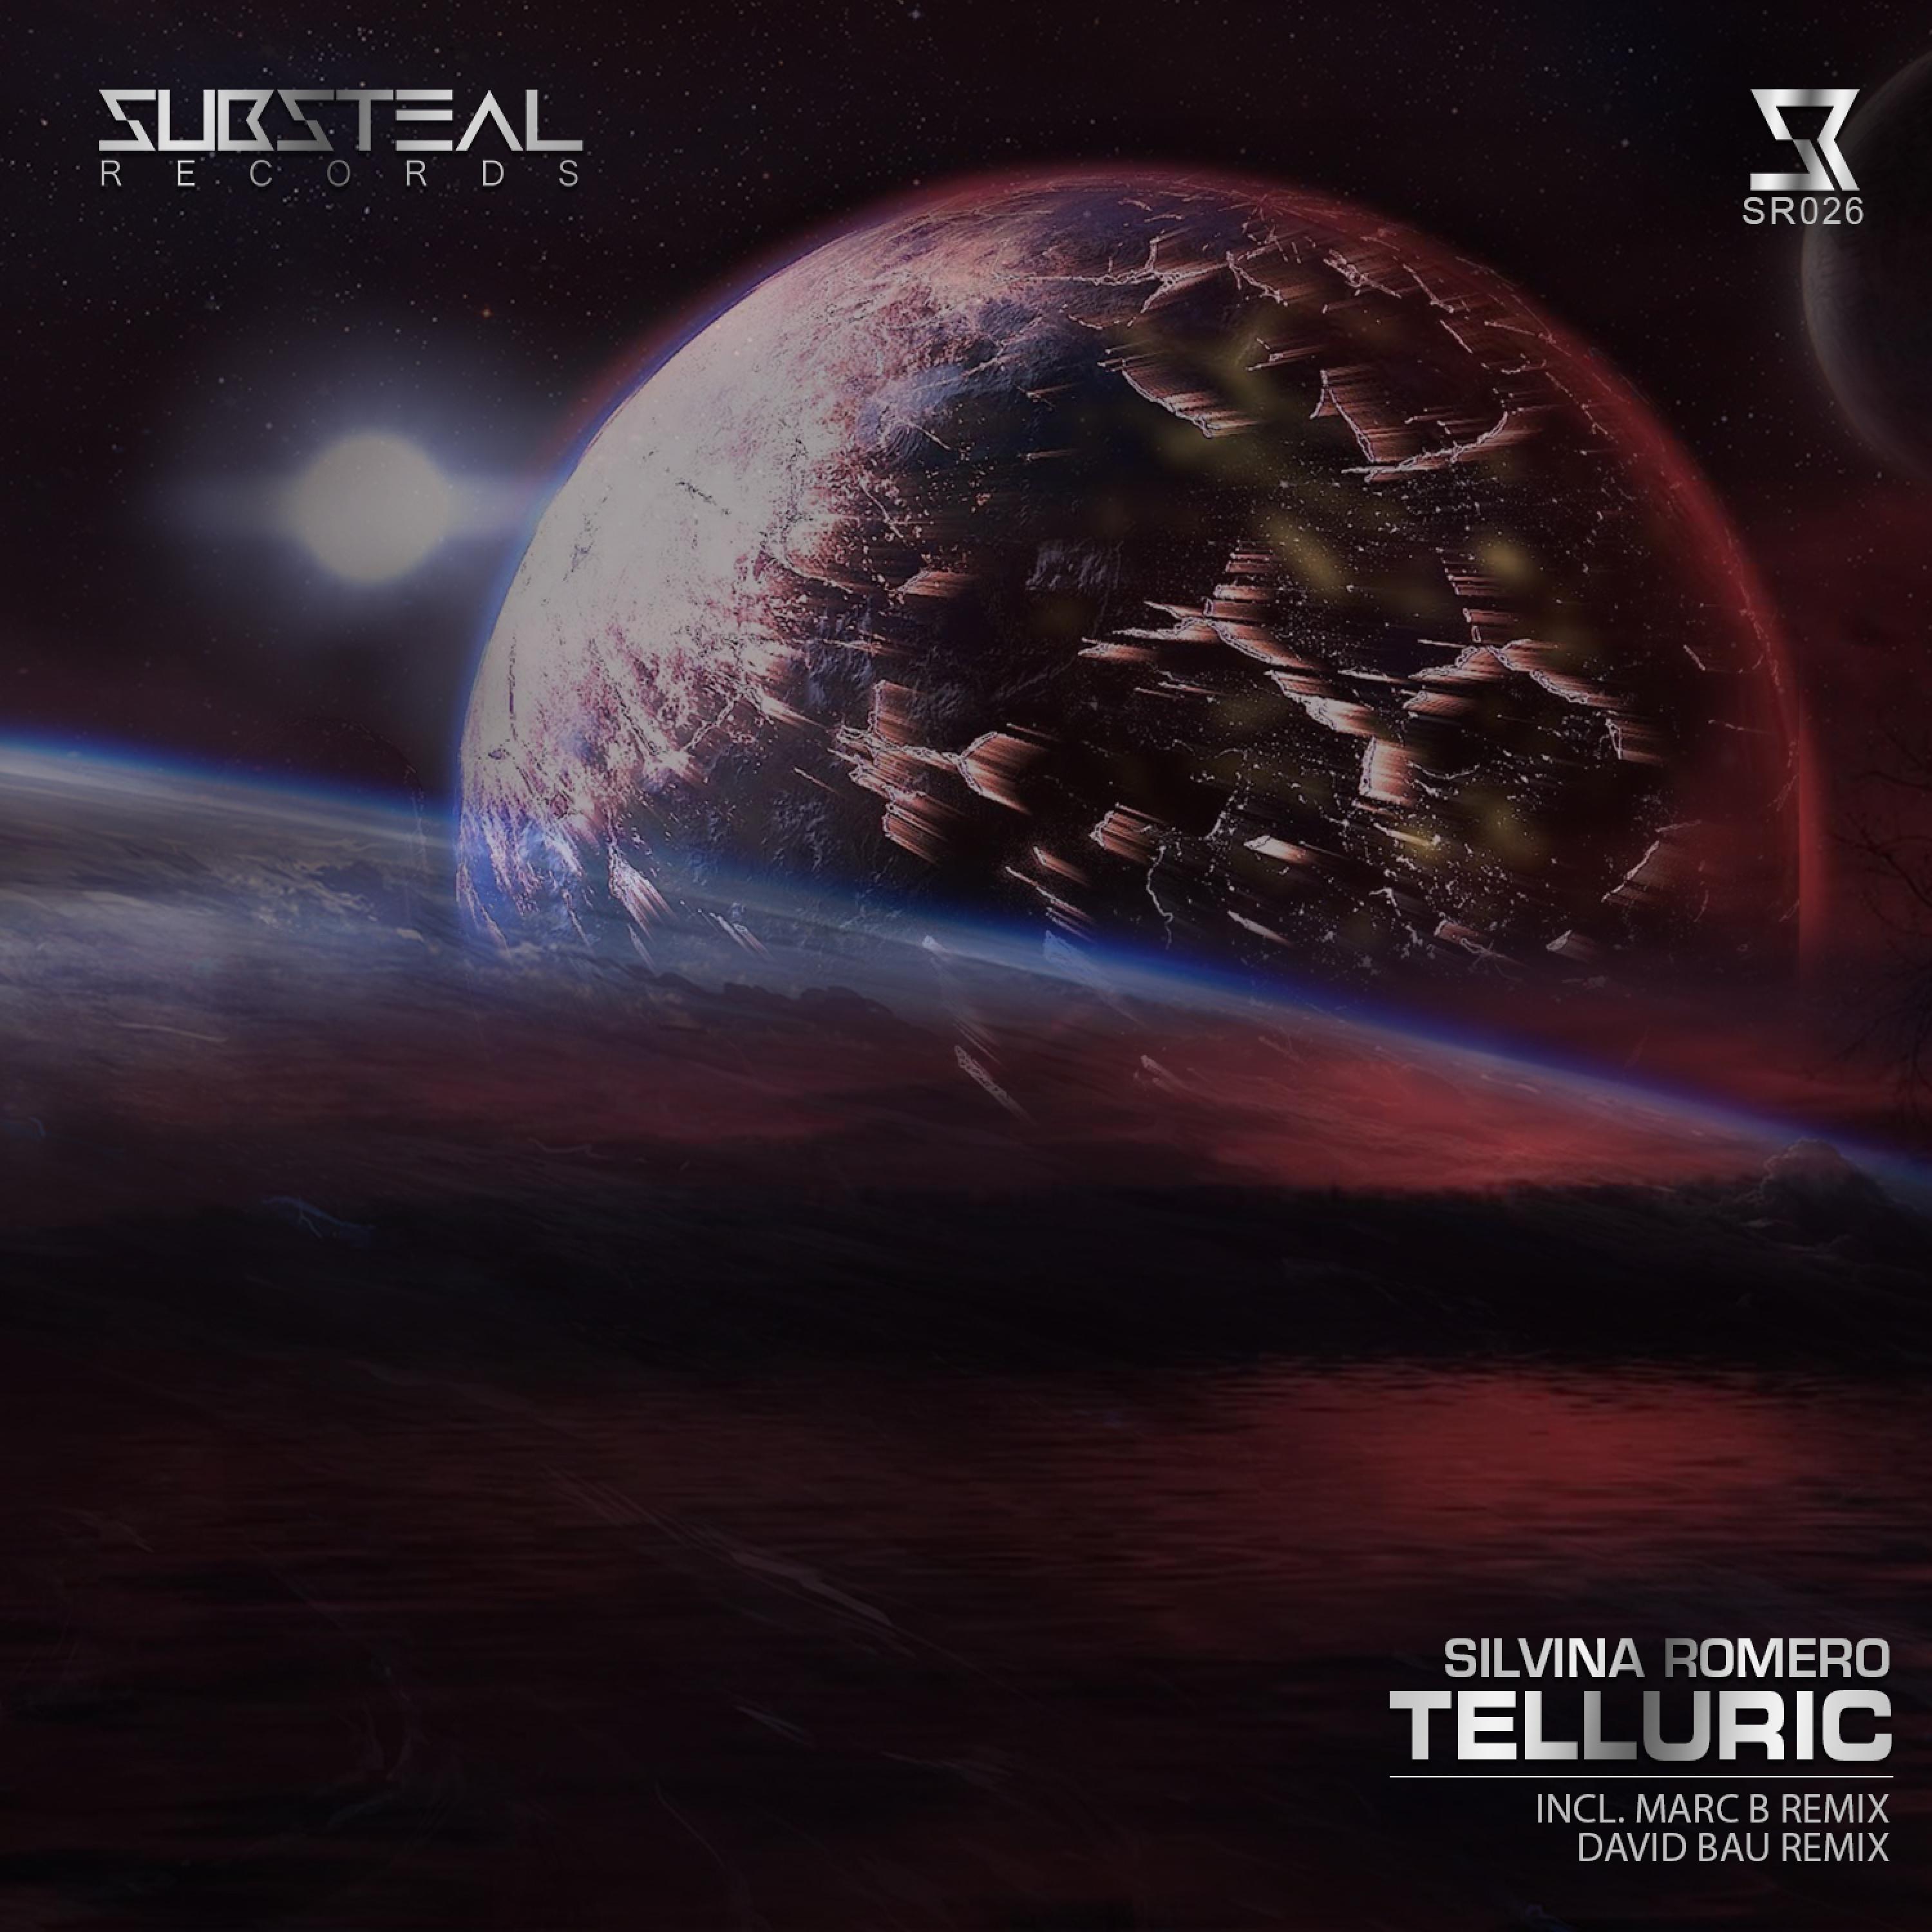 Telluric (David Bau Remix)